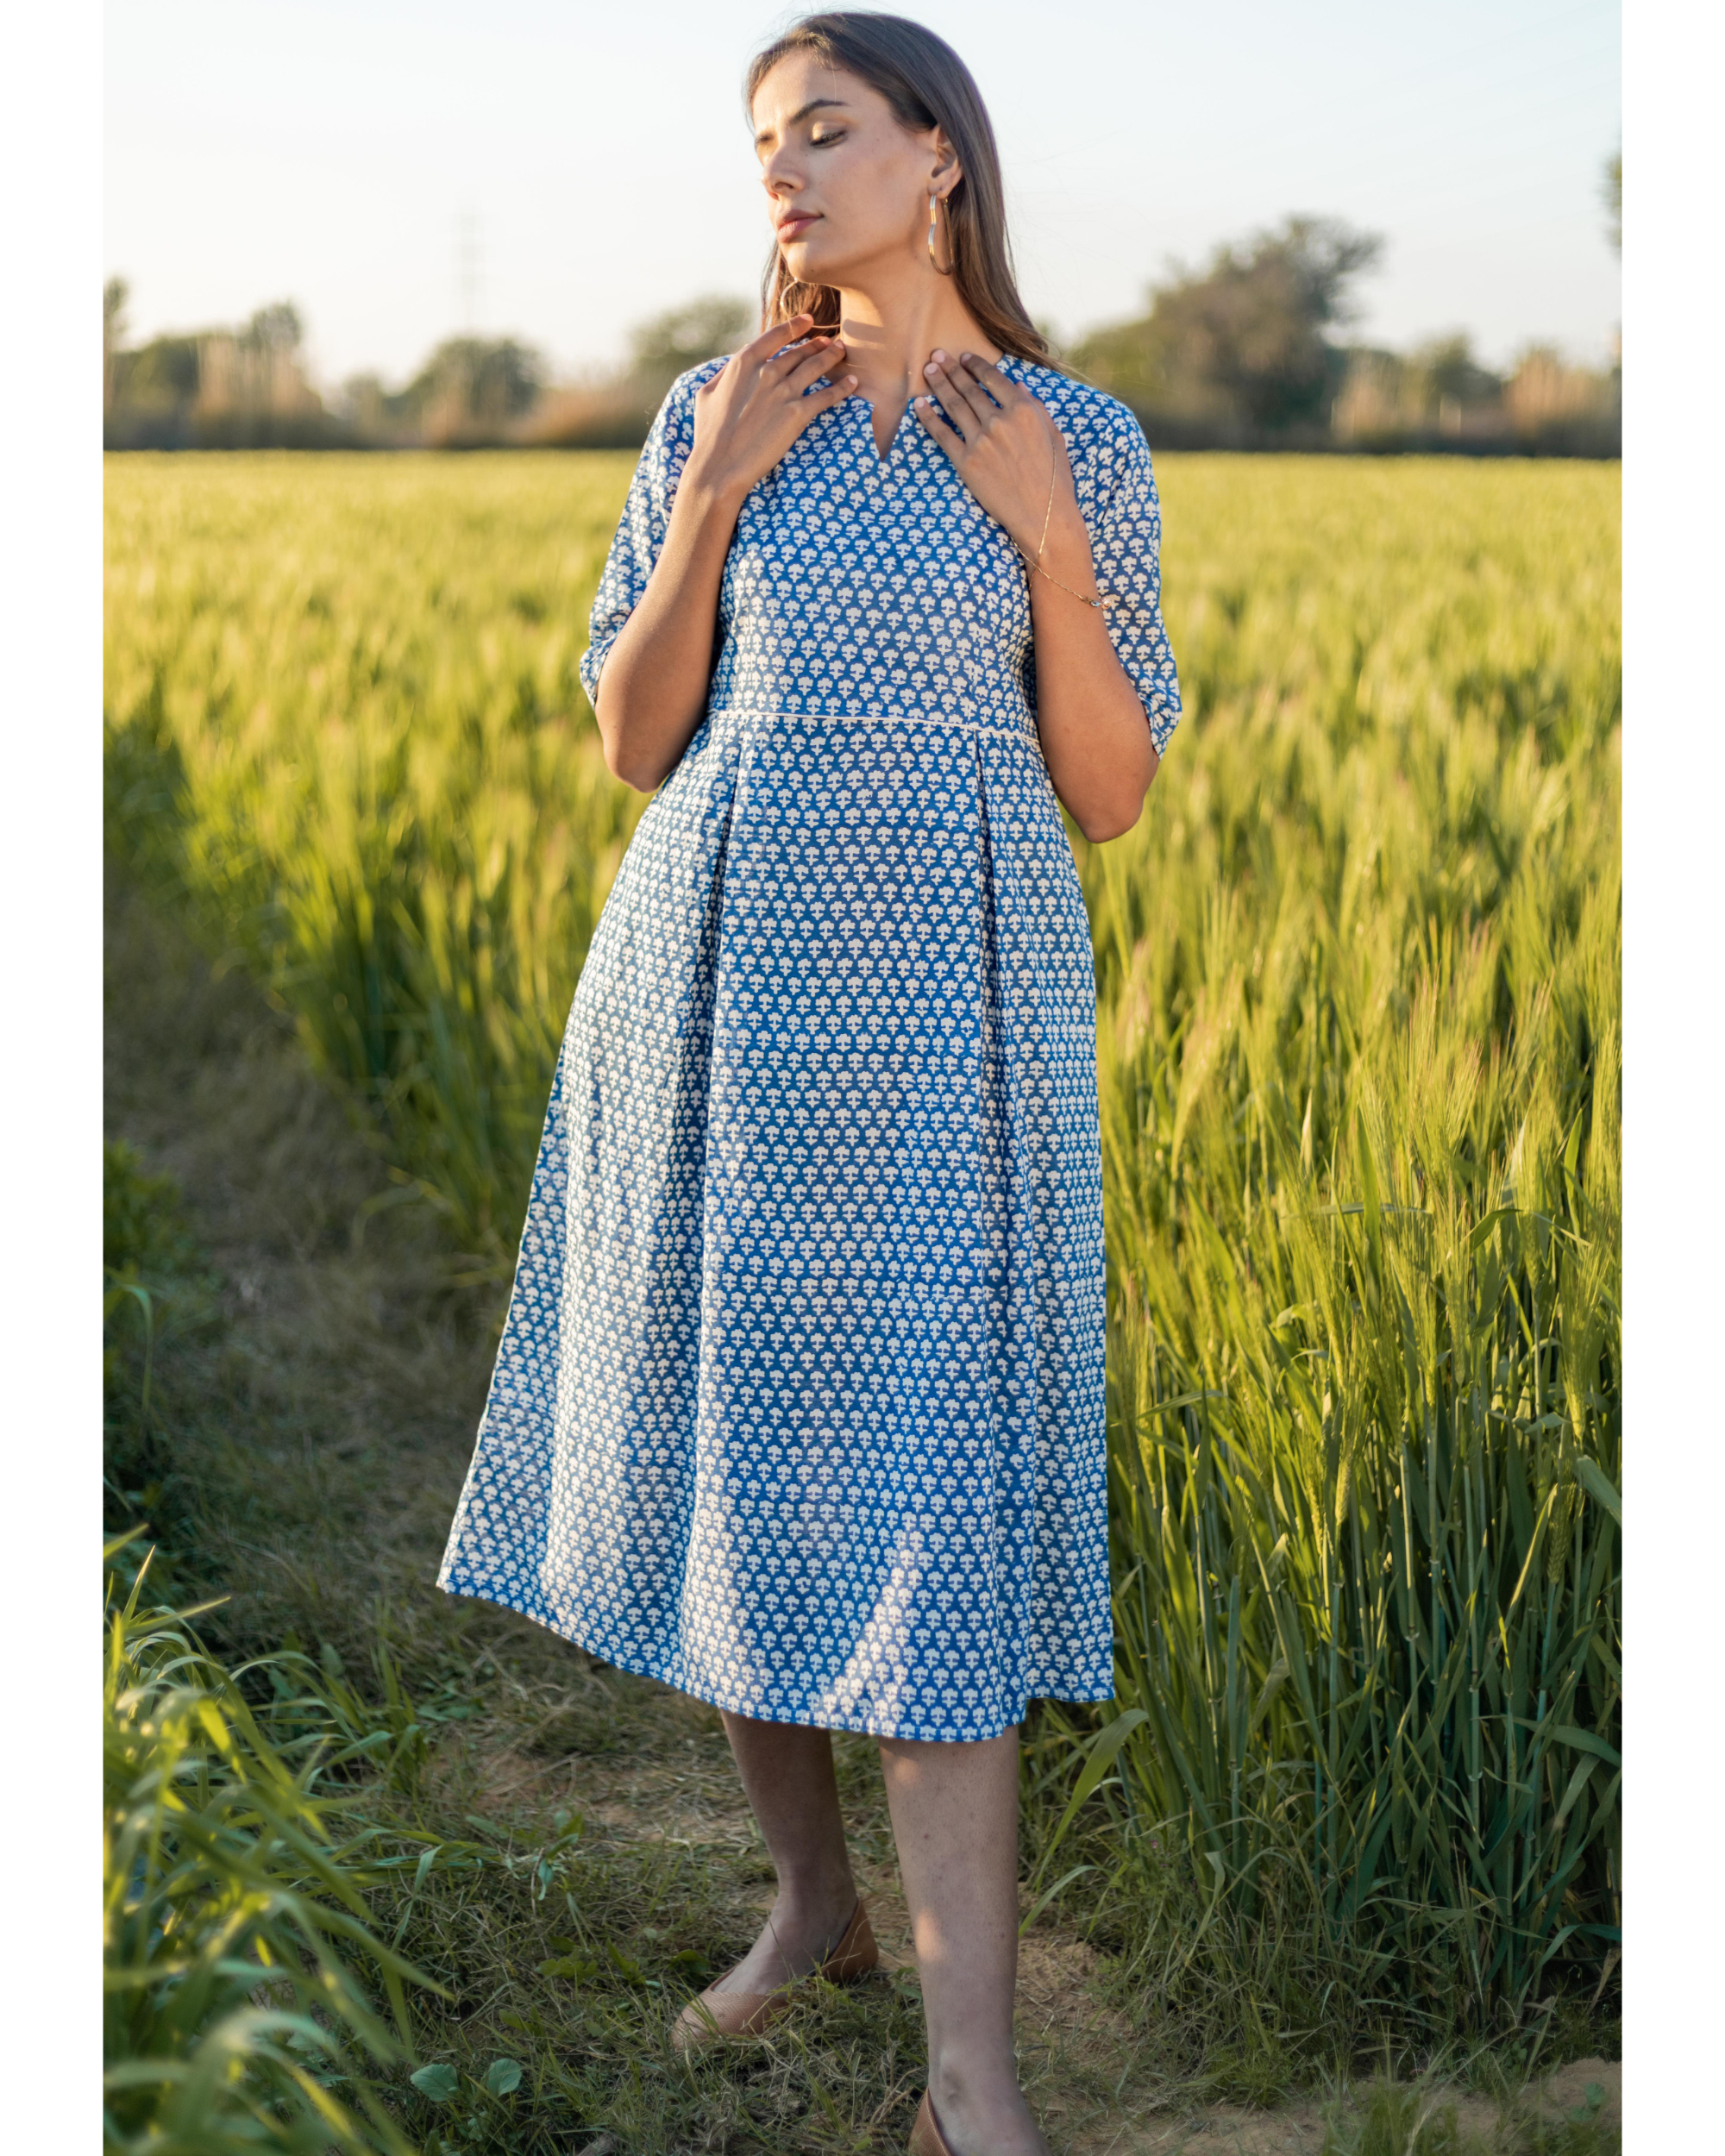 Mist blue handblock printed cotton dress by Sooti Syahi